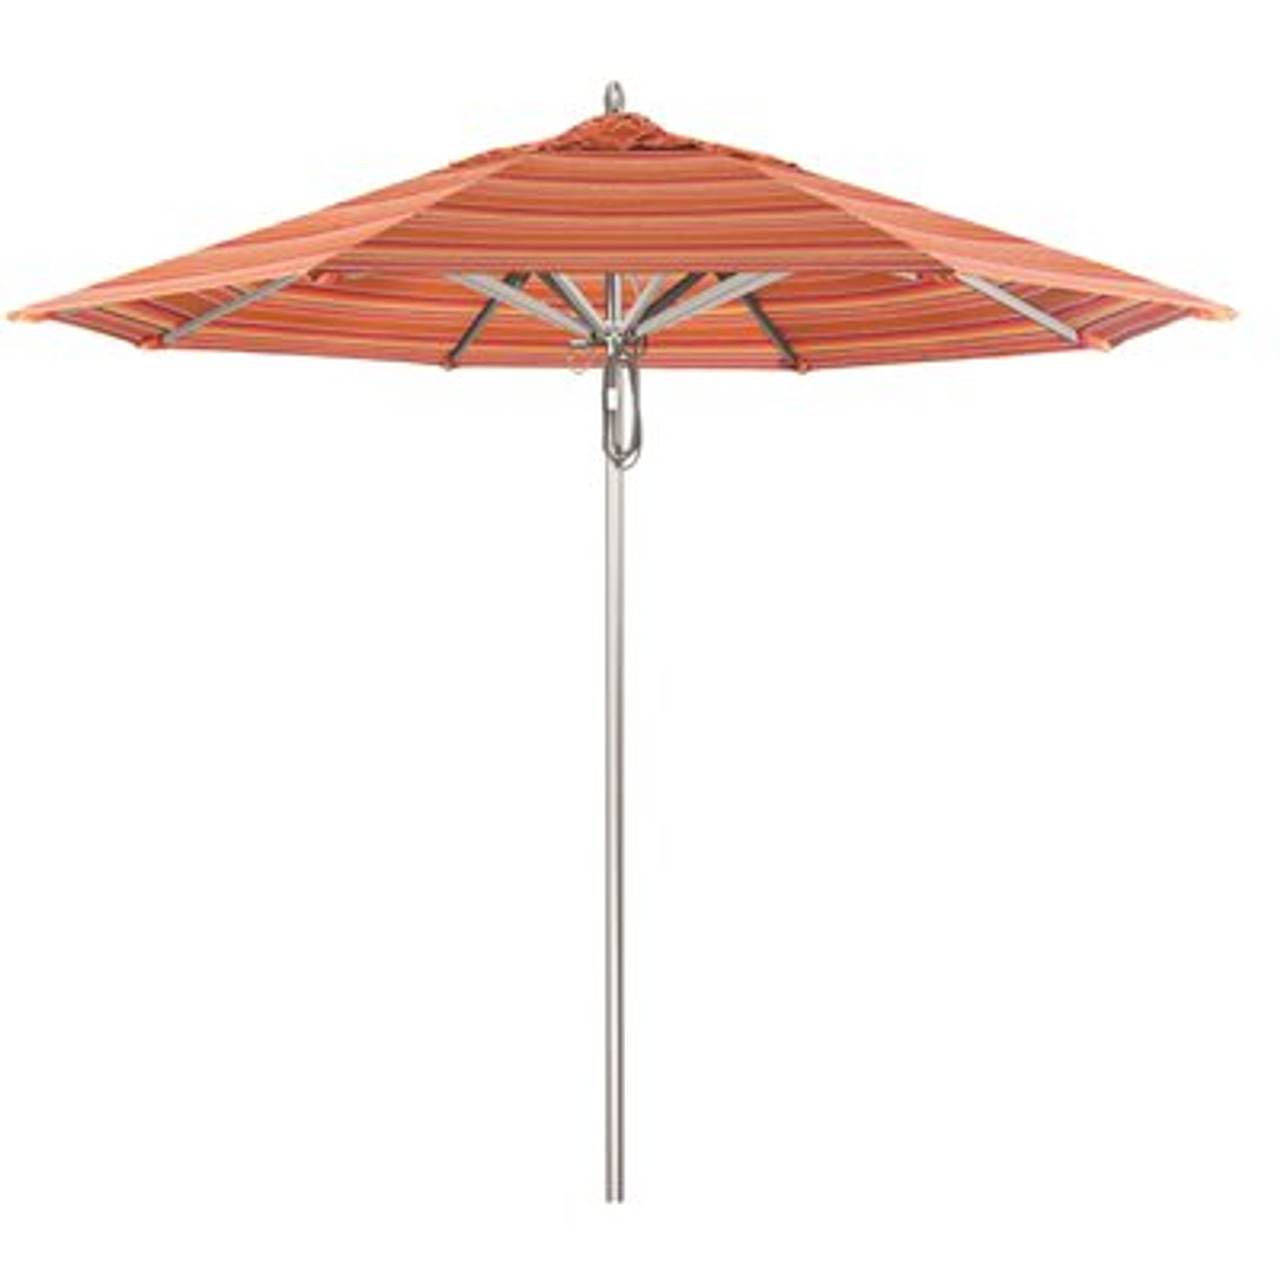 California Umbrella 9 ft. Silver Aluminum Commercial Market Patio Umbrella with Pulley Lift in Dolce Mango Sunbrella